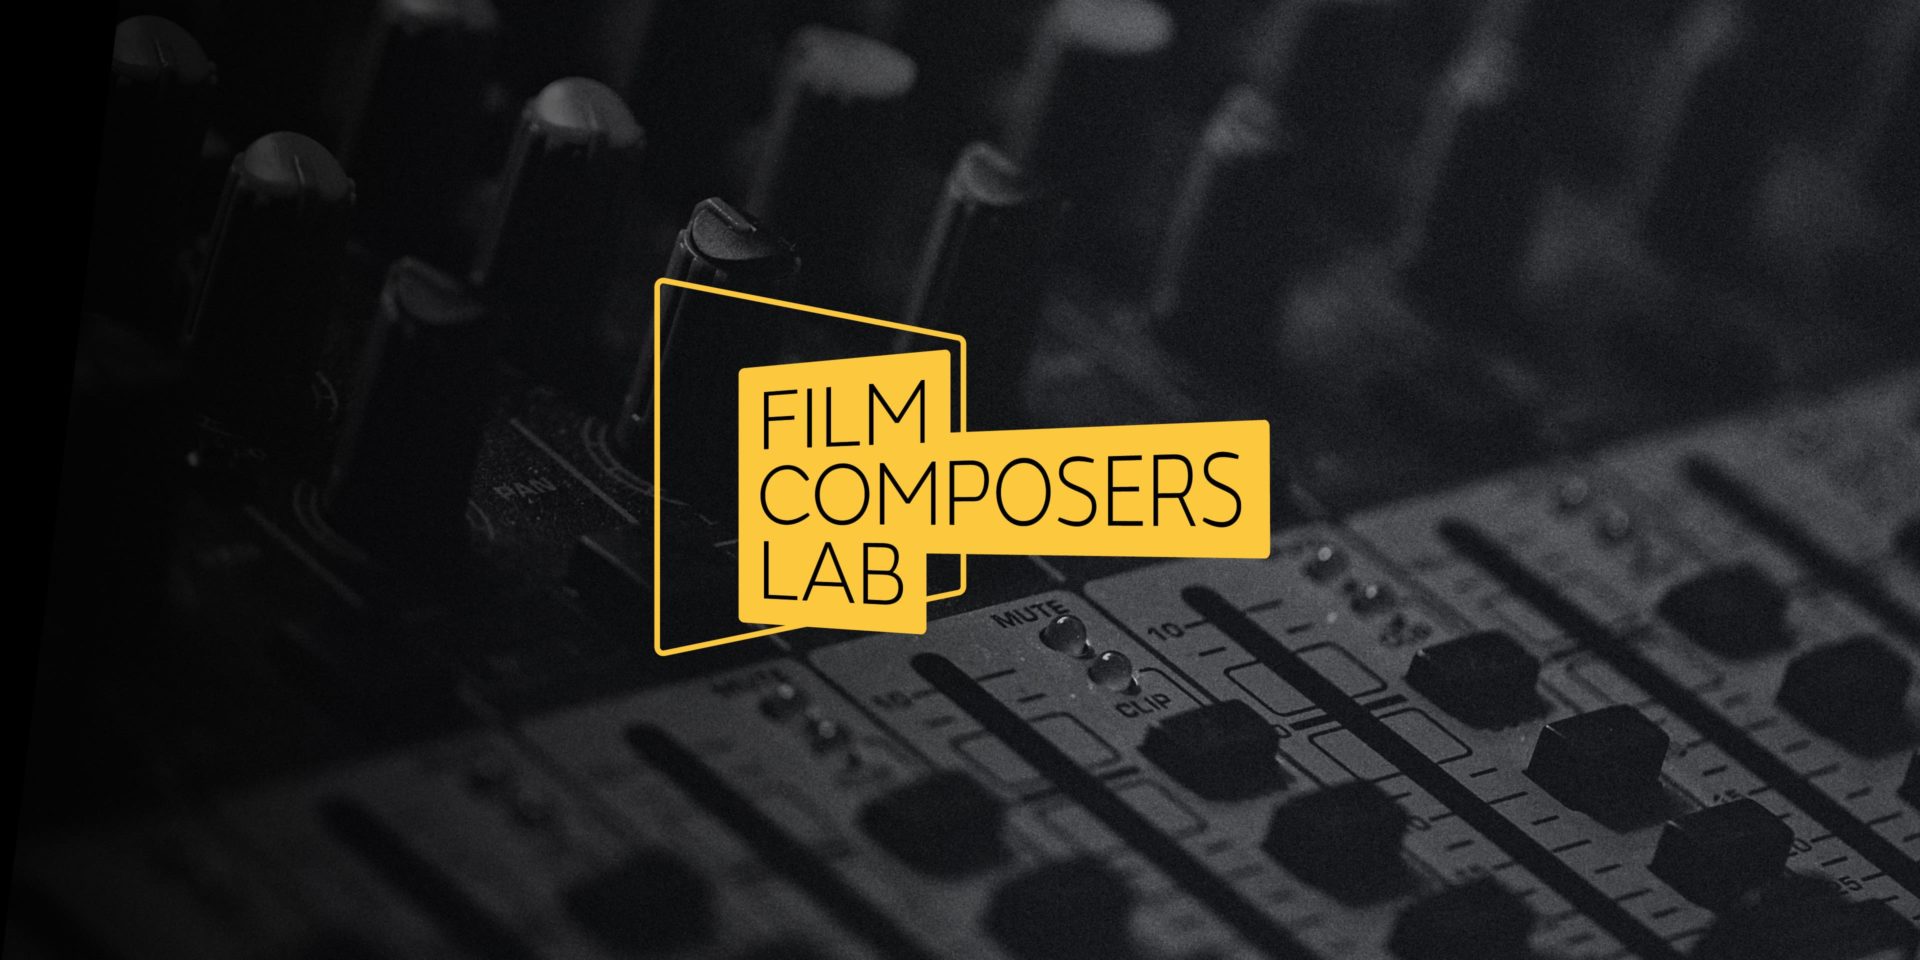 Film Composers Lab